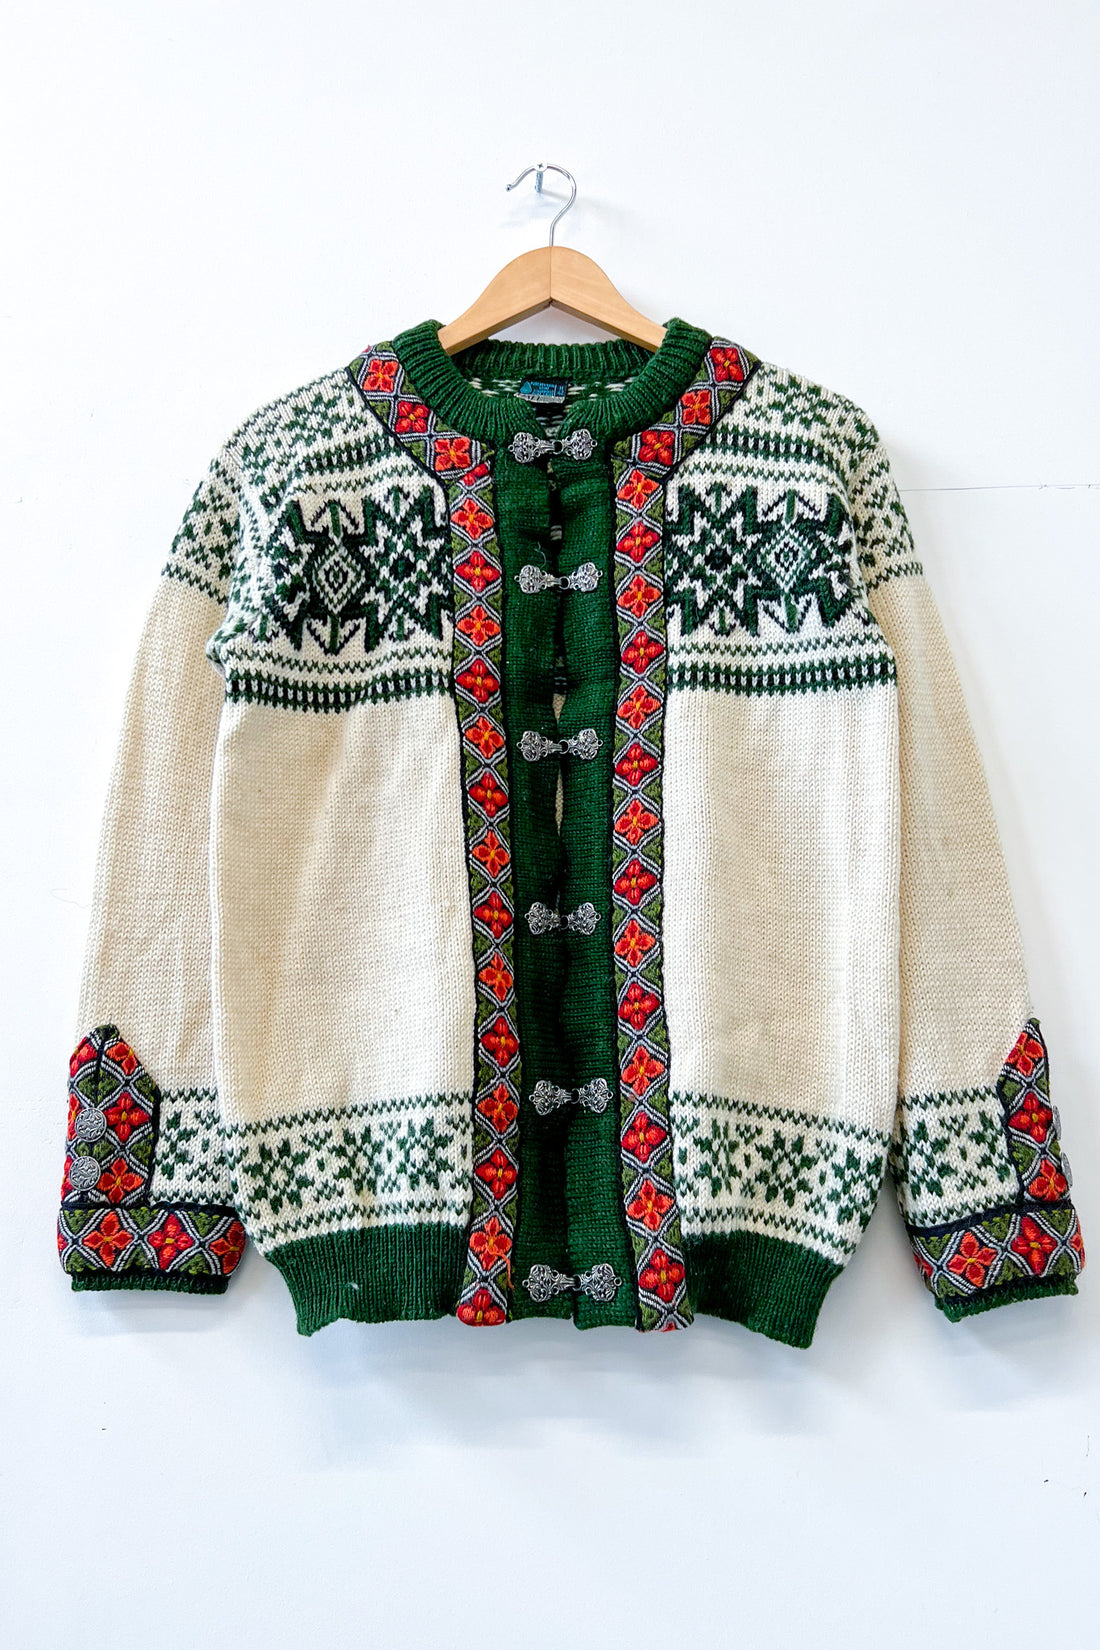 Vintage Dale of Norway Knit Cardigan